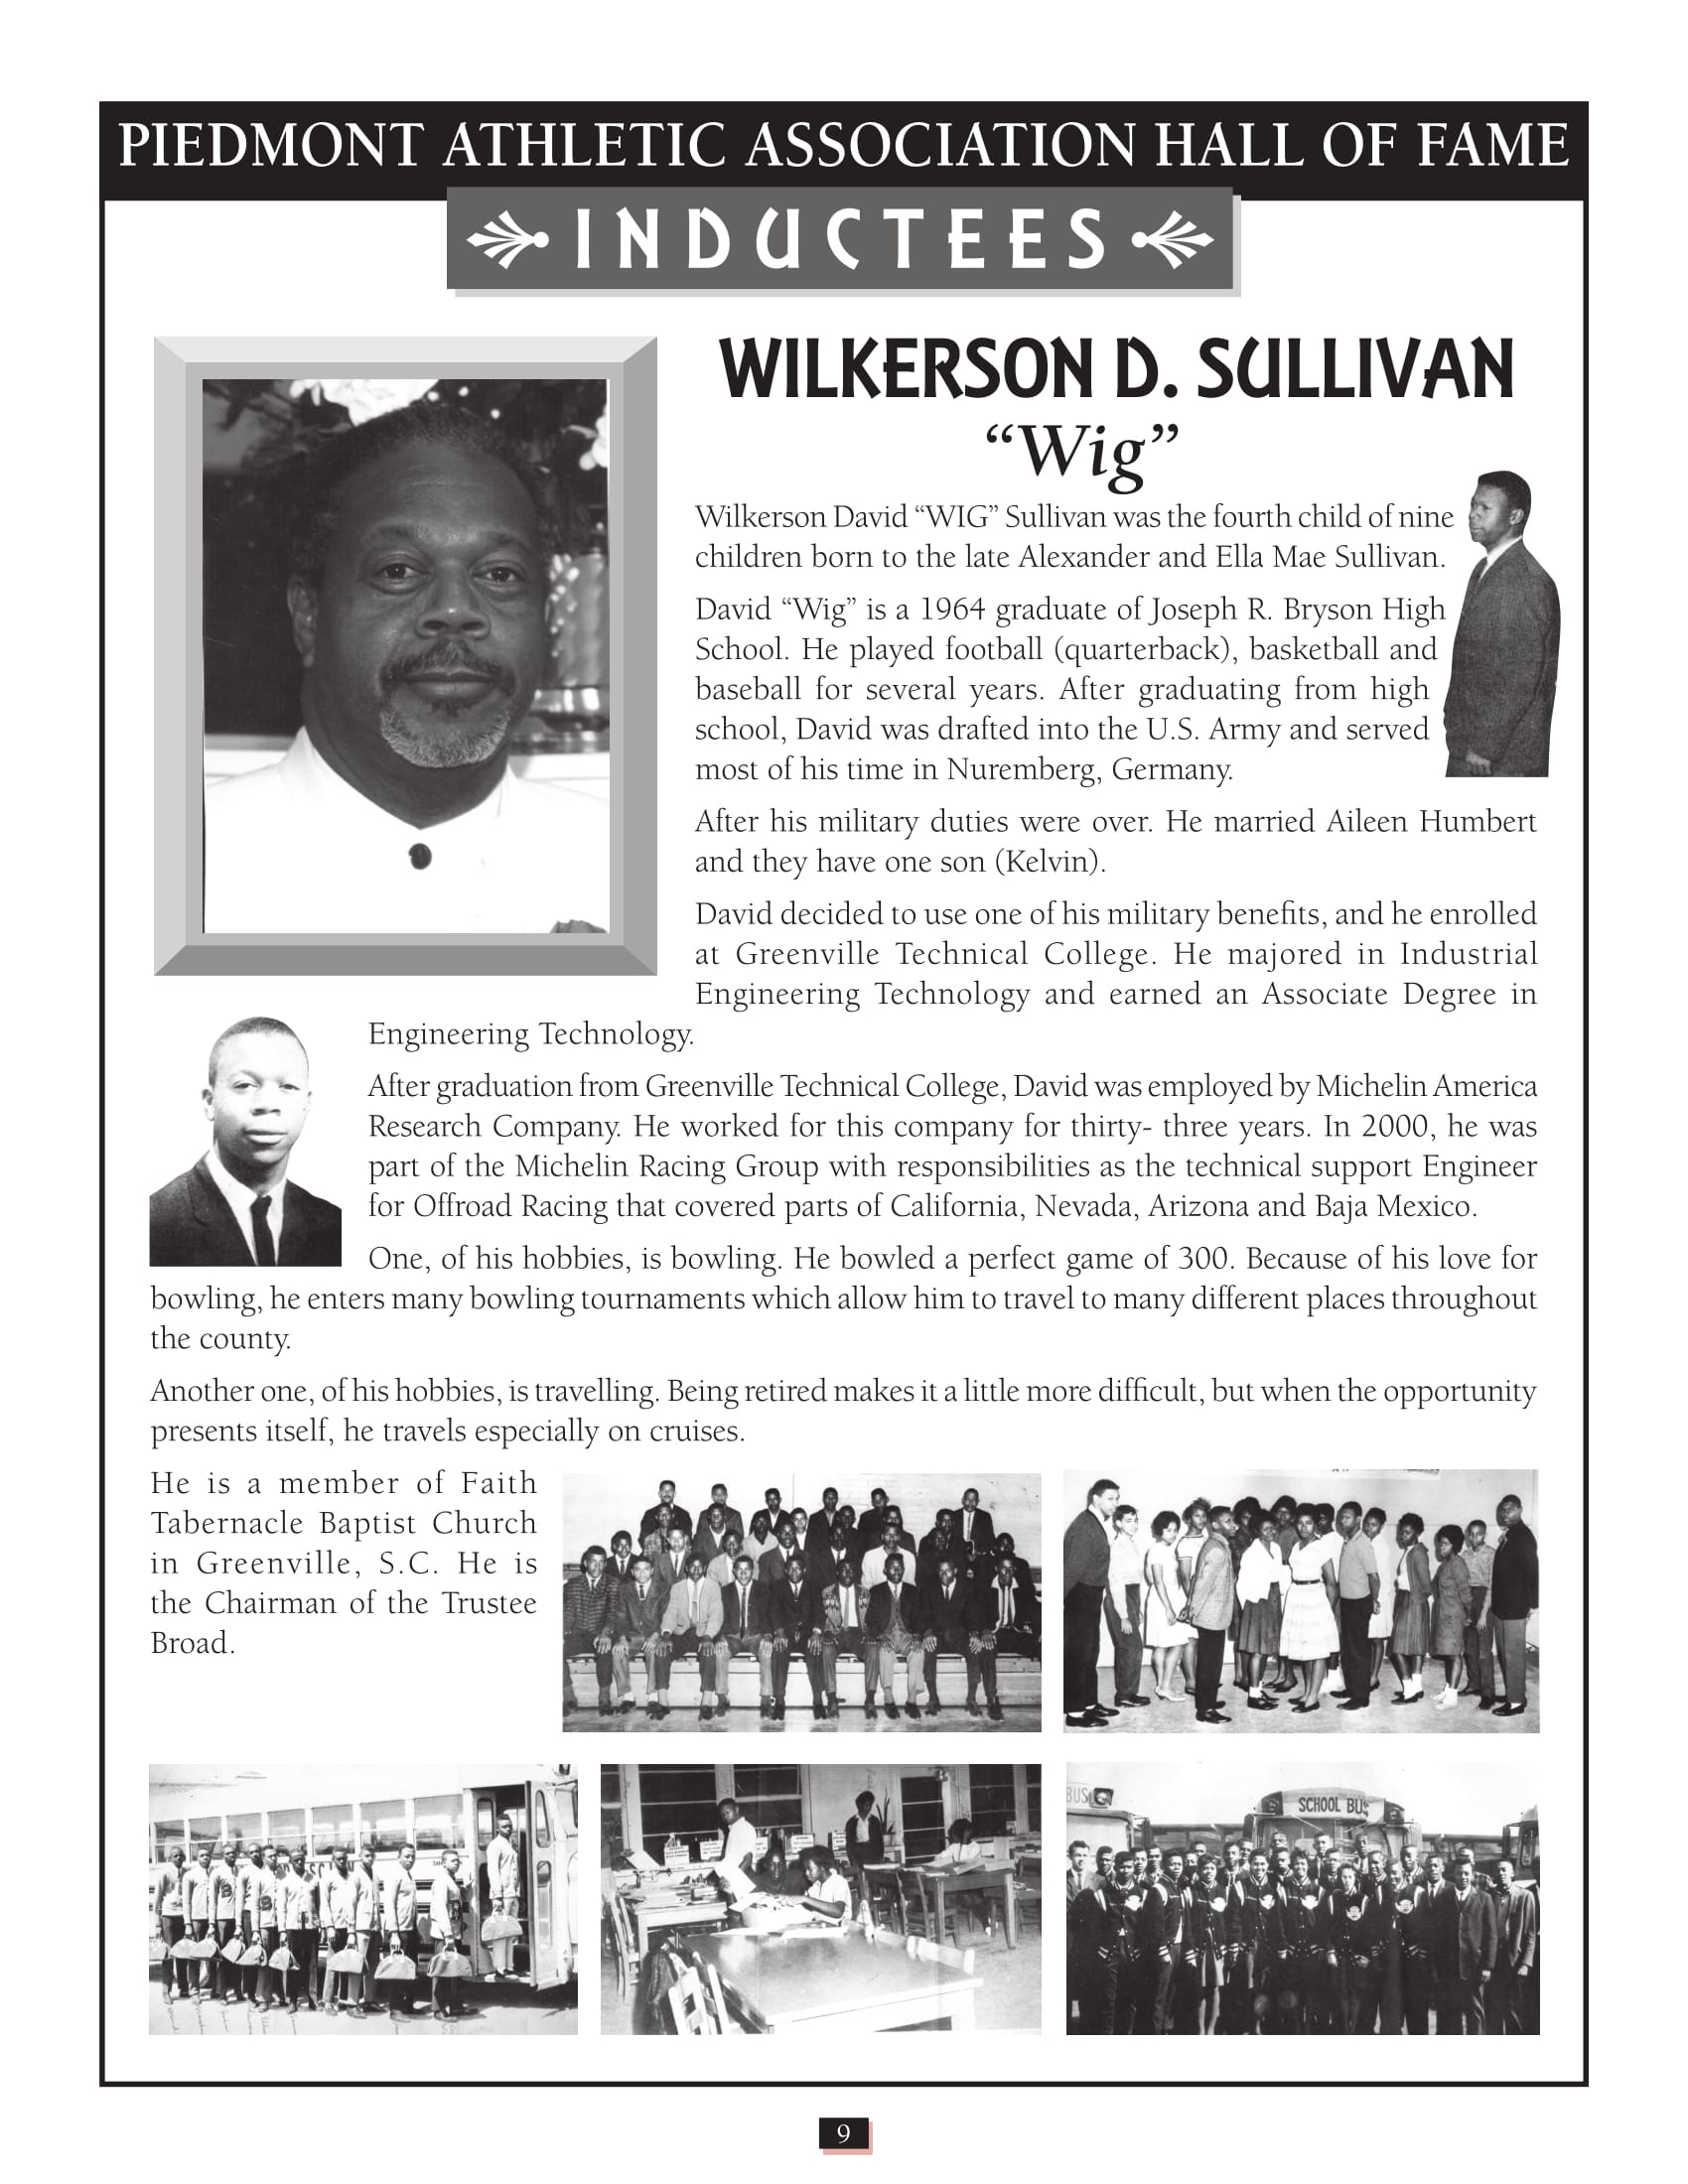 Wilkerson Sullivan